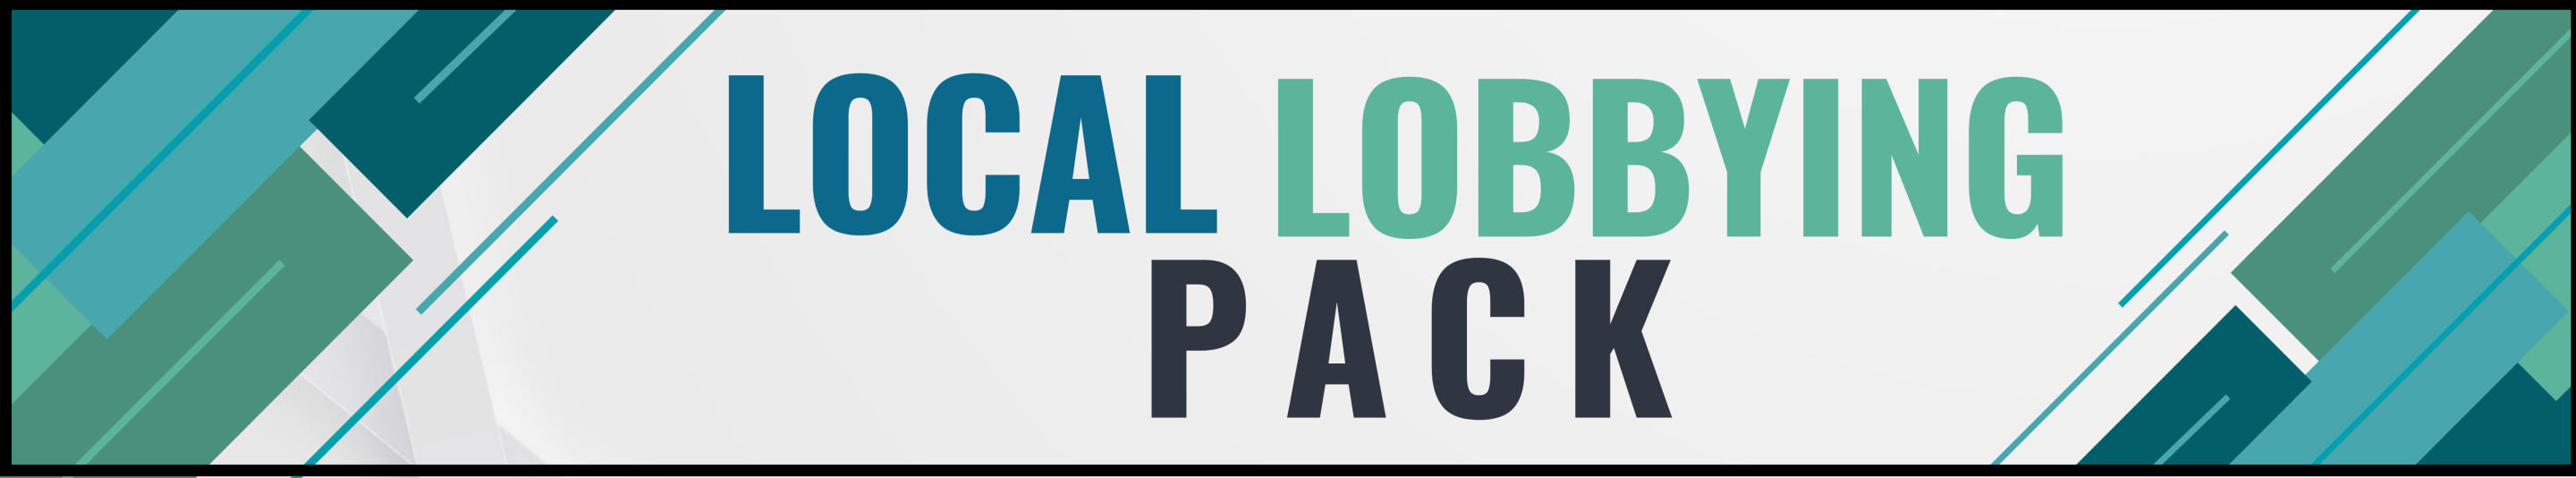 Local Lobbying Pack Banner e1680636031861